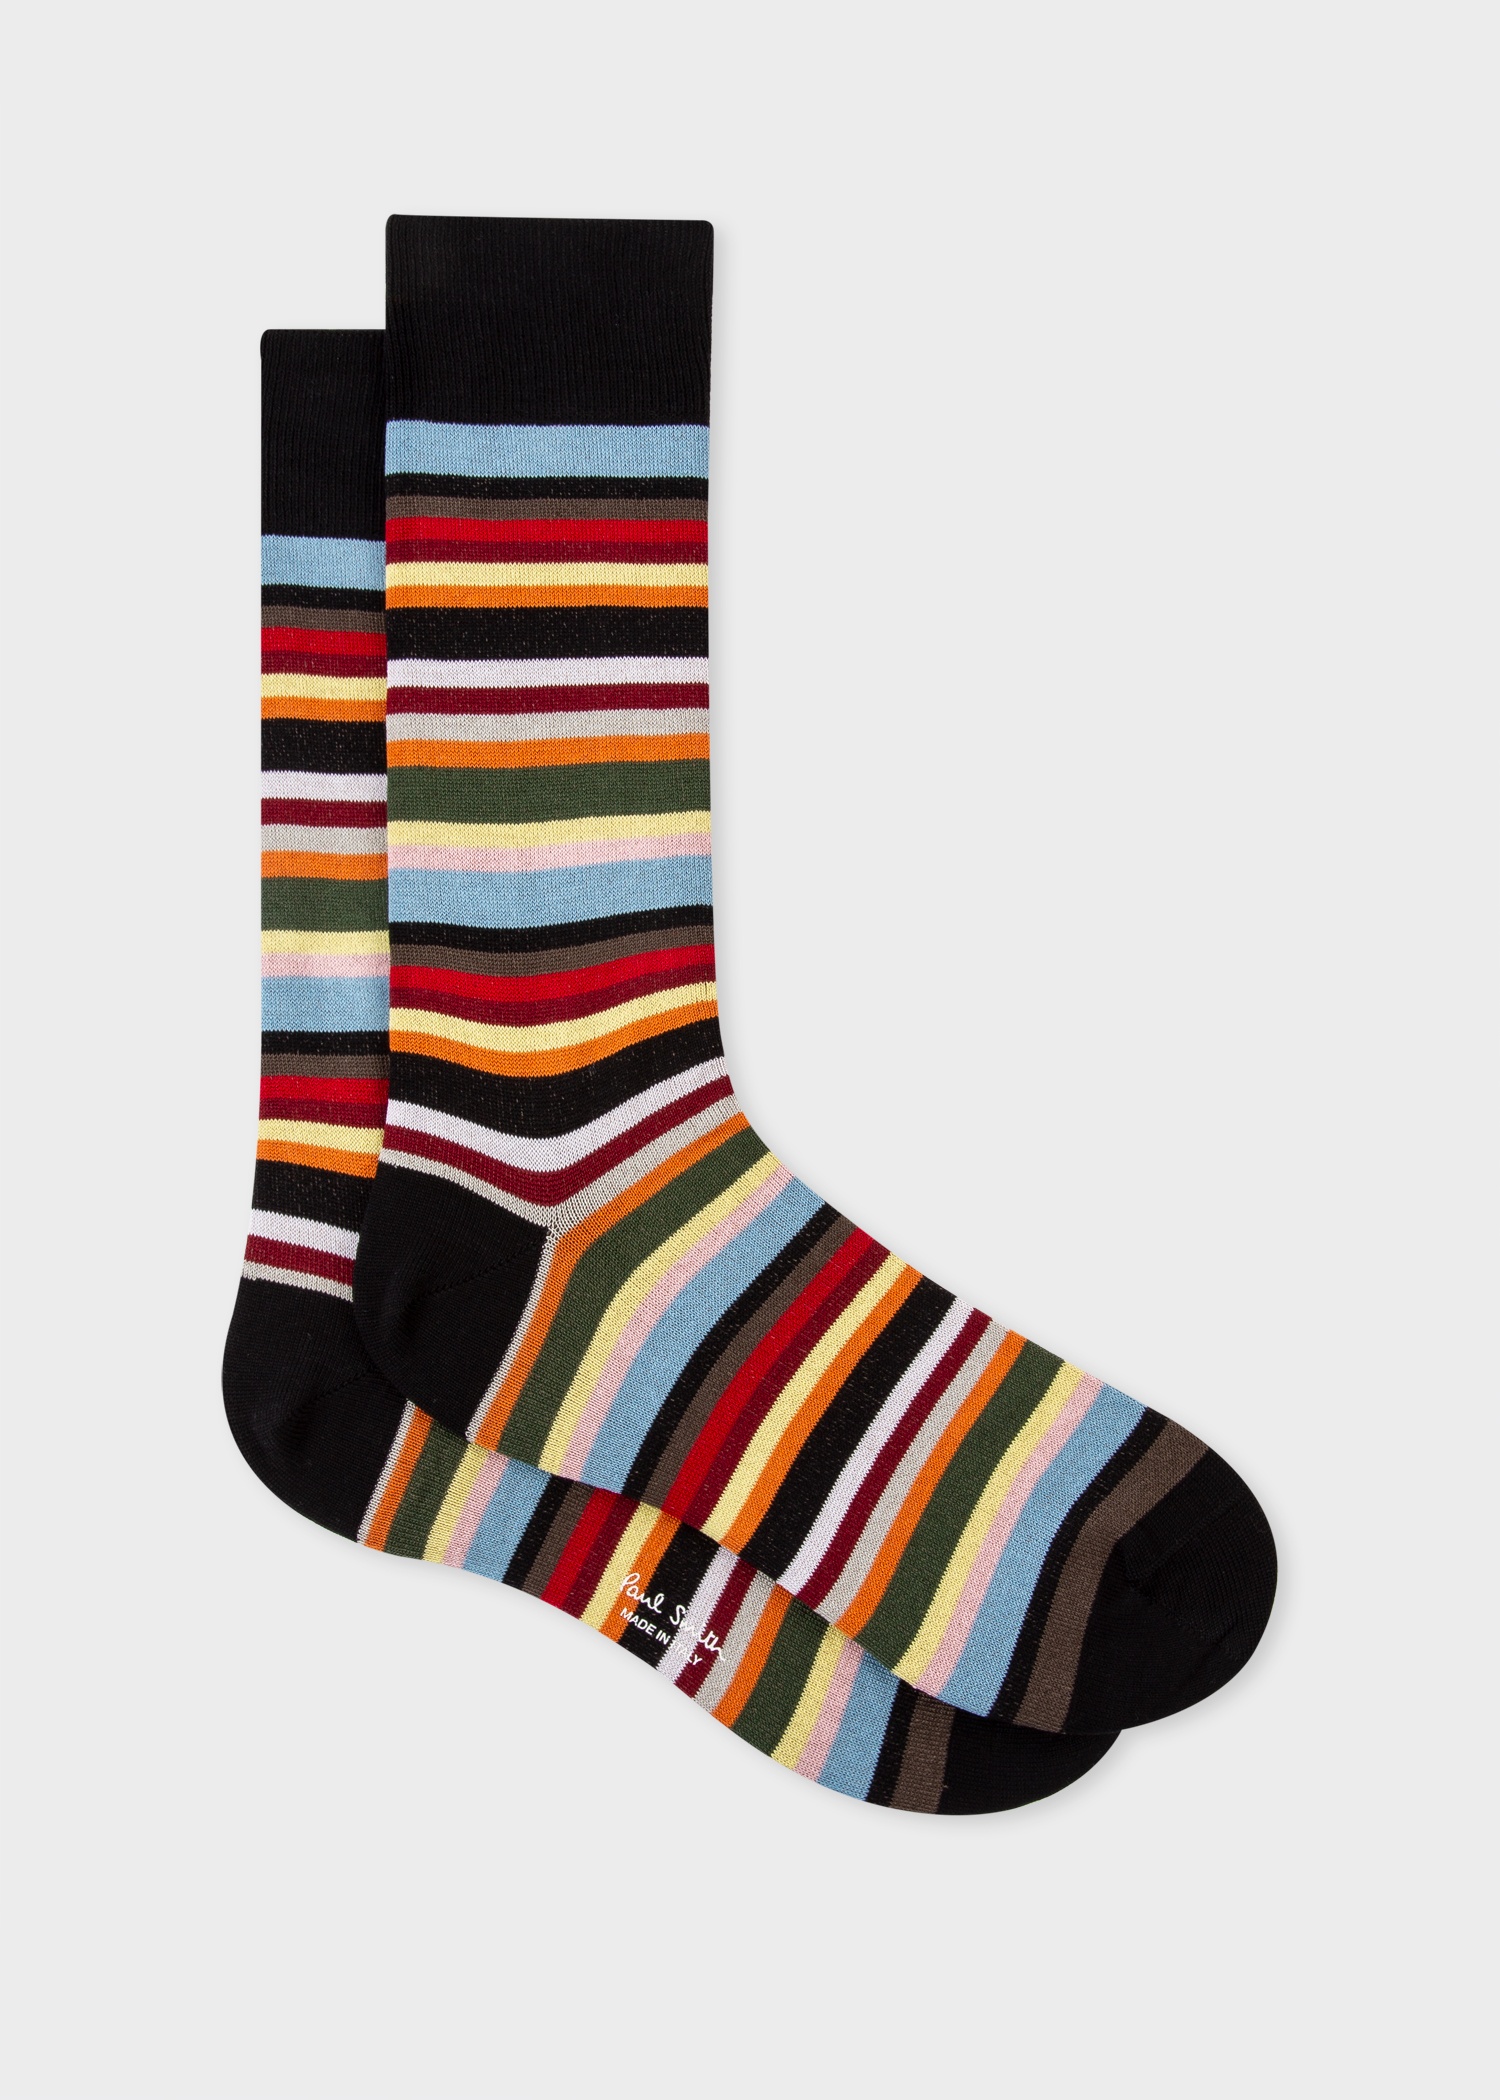 'Signature Stripe' Socks - 1